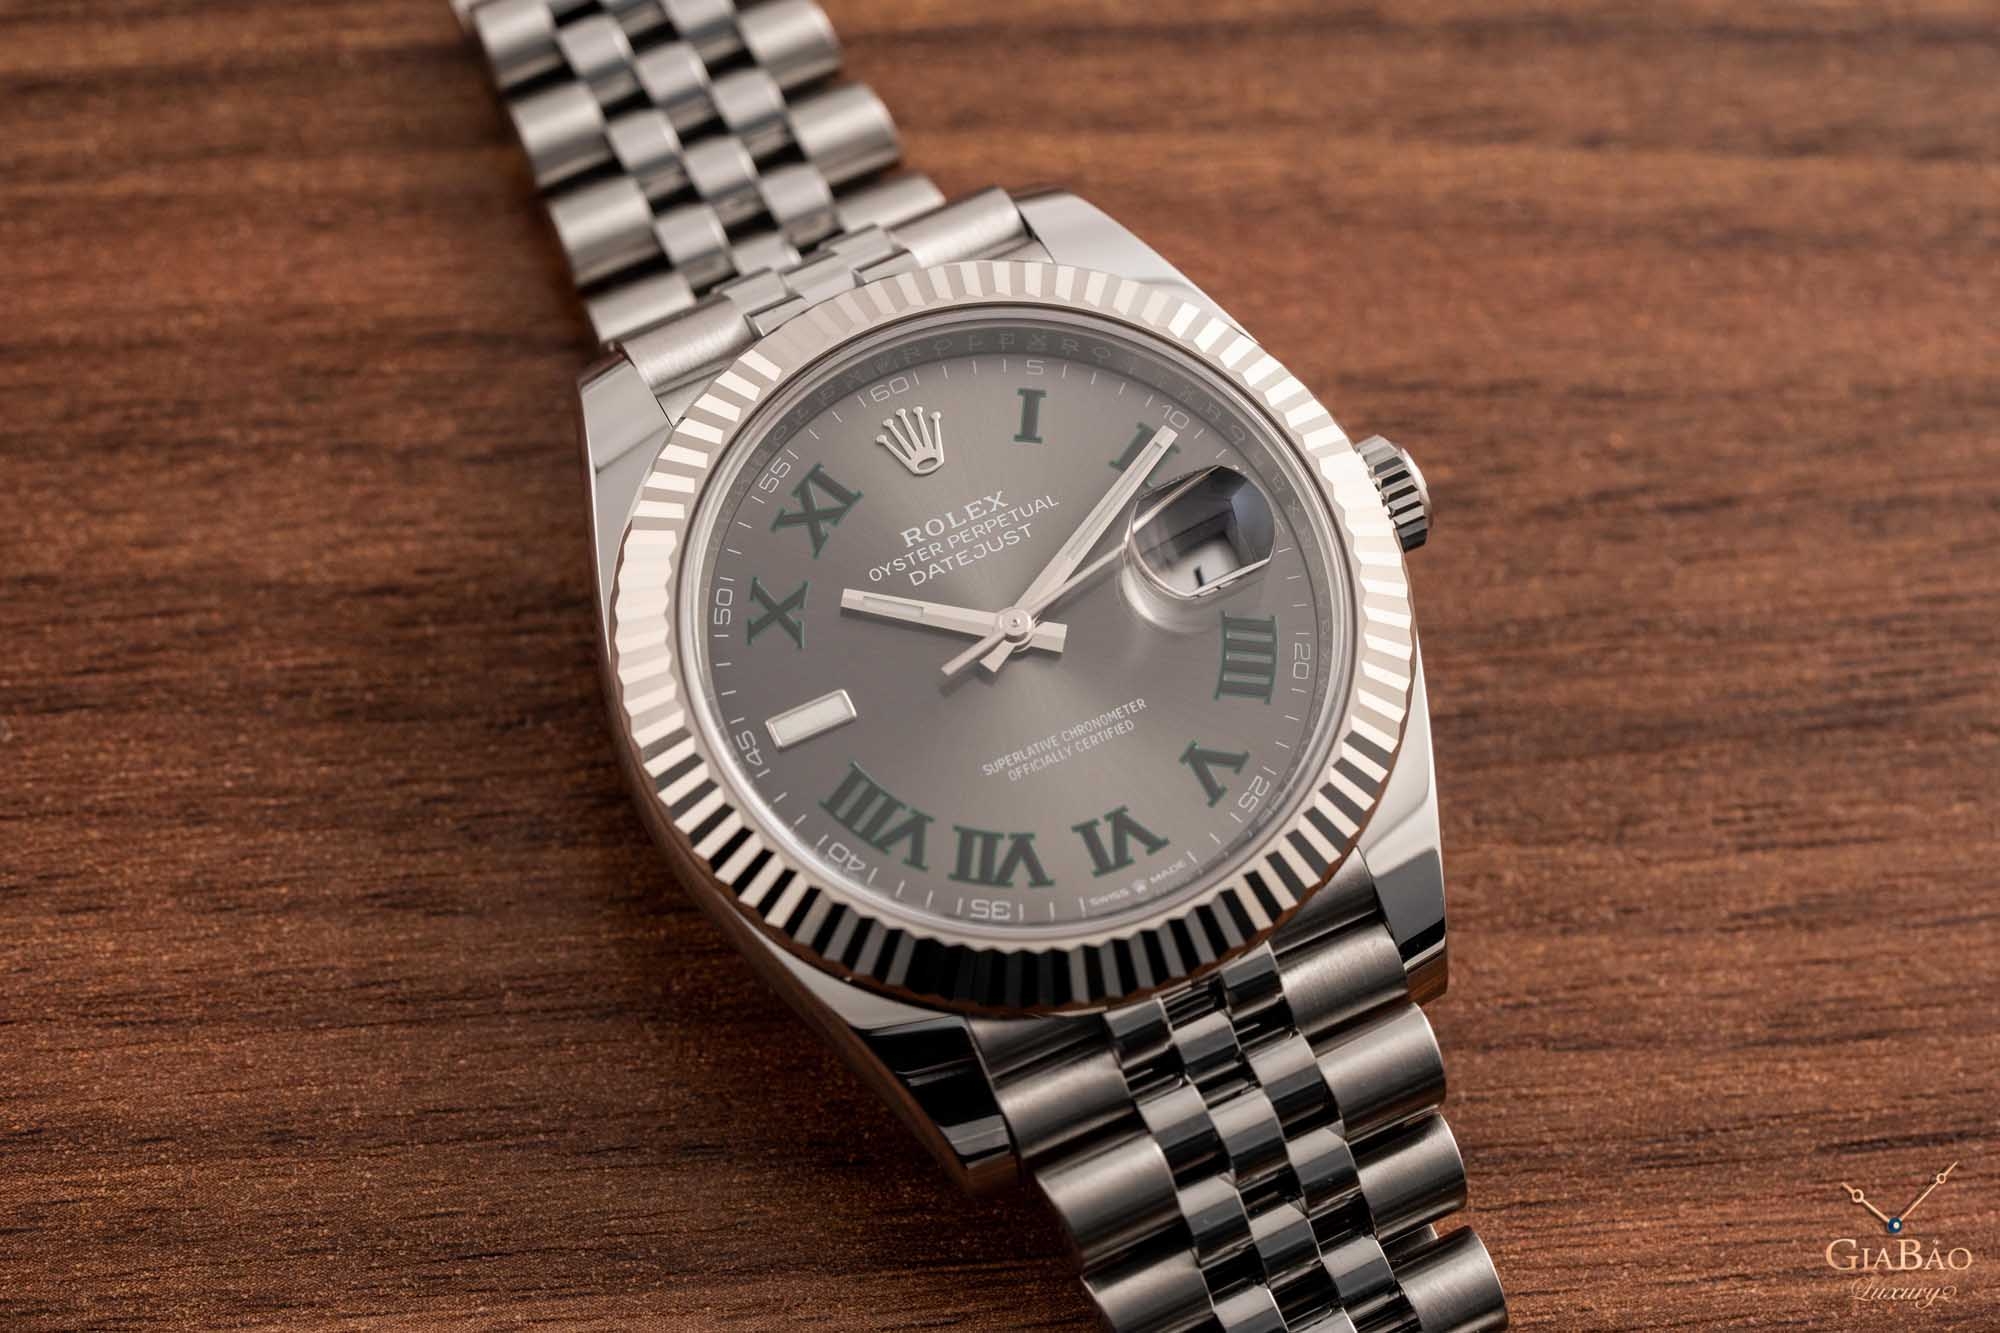 Review đồng hồ Rolex Datejust 41mm mặt số Rhodium